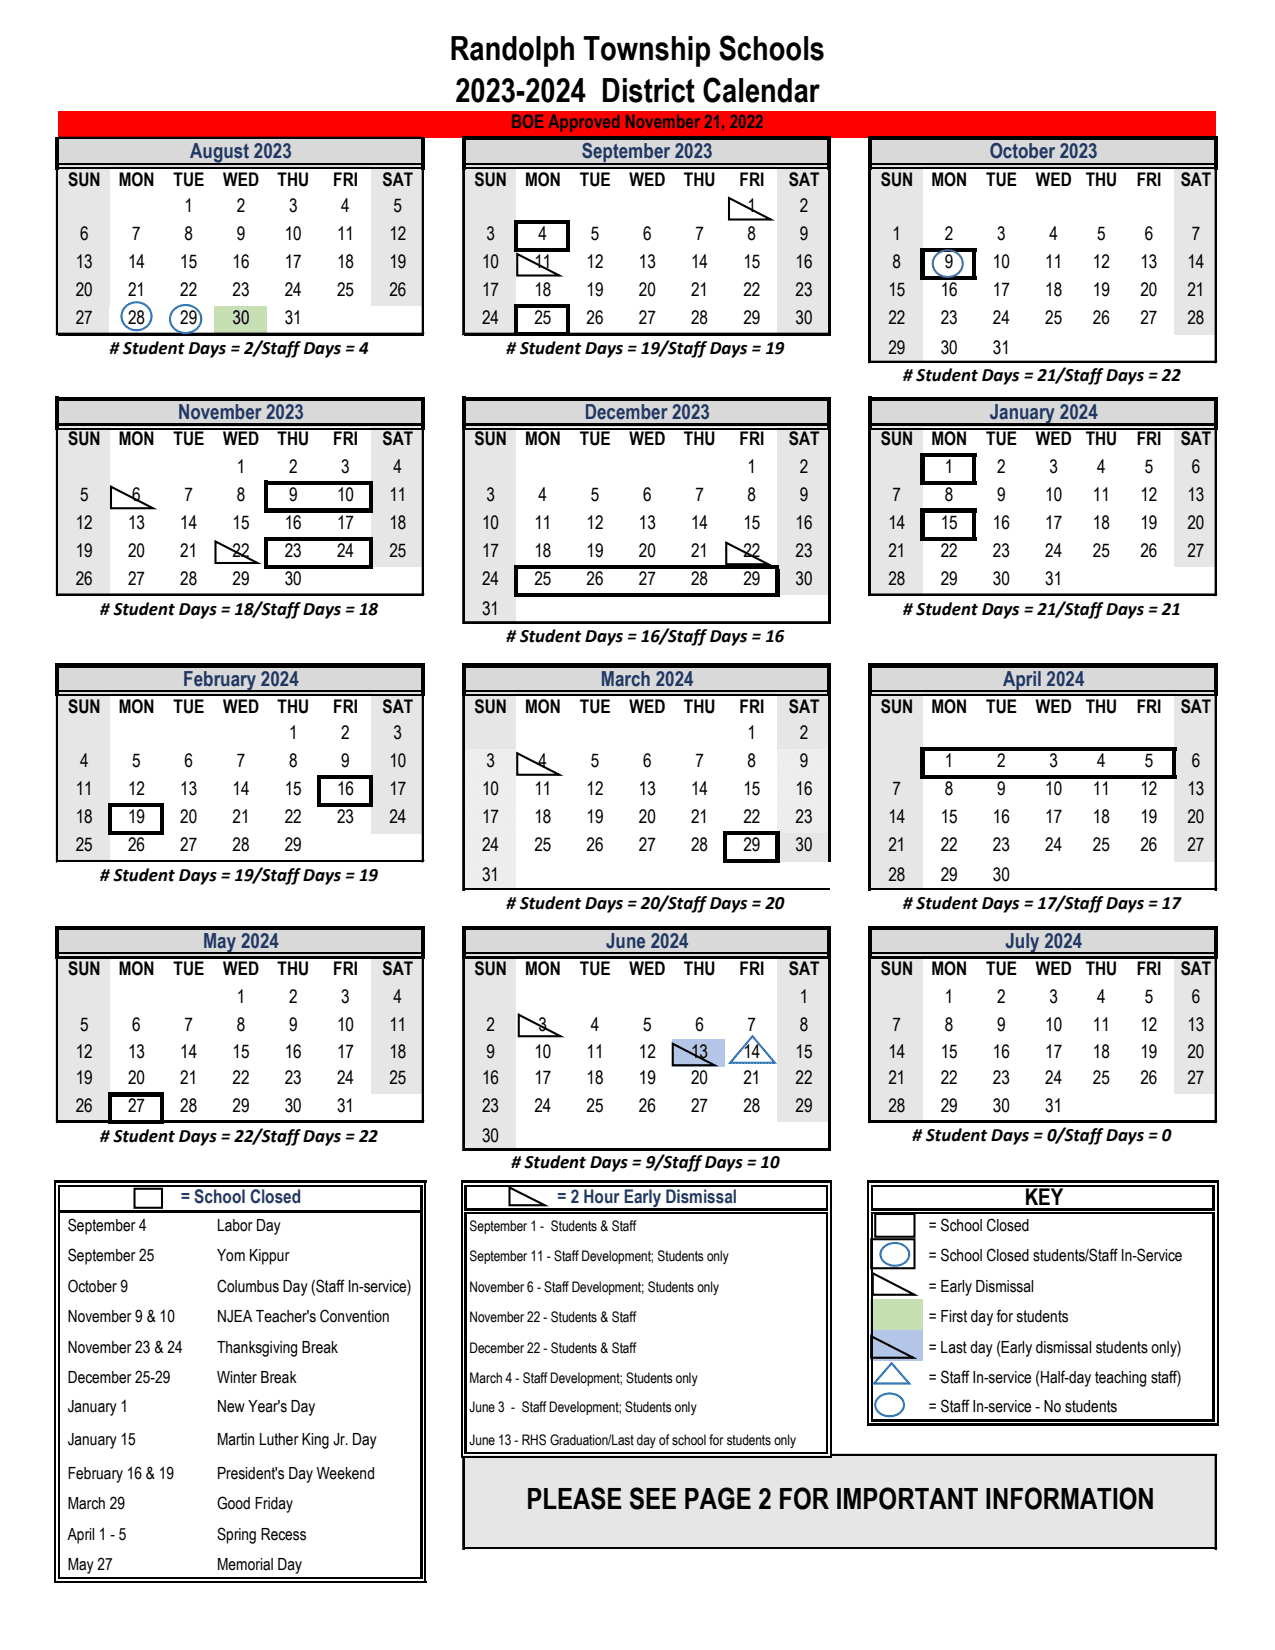 randolph-township-school-district-calendar-2023-2024-in-pdf